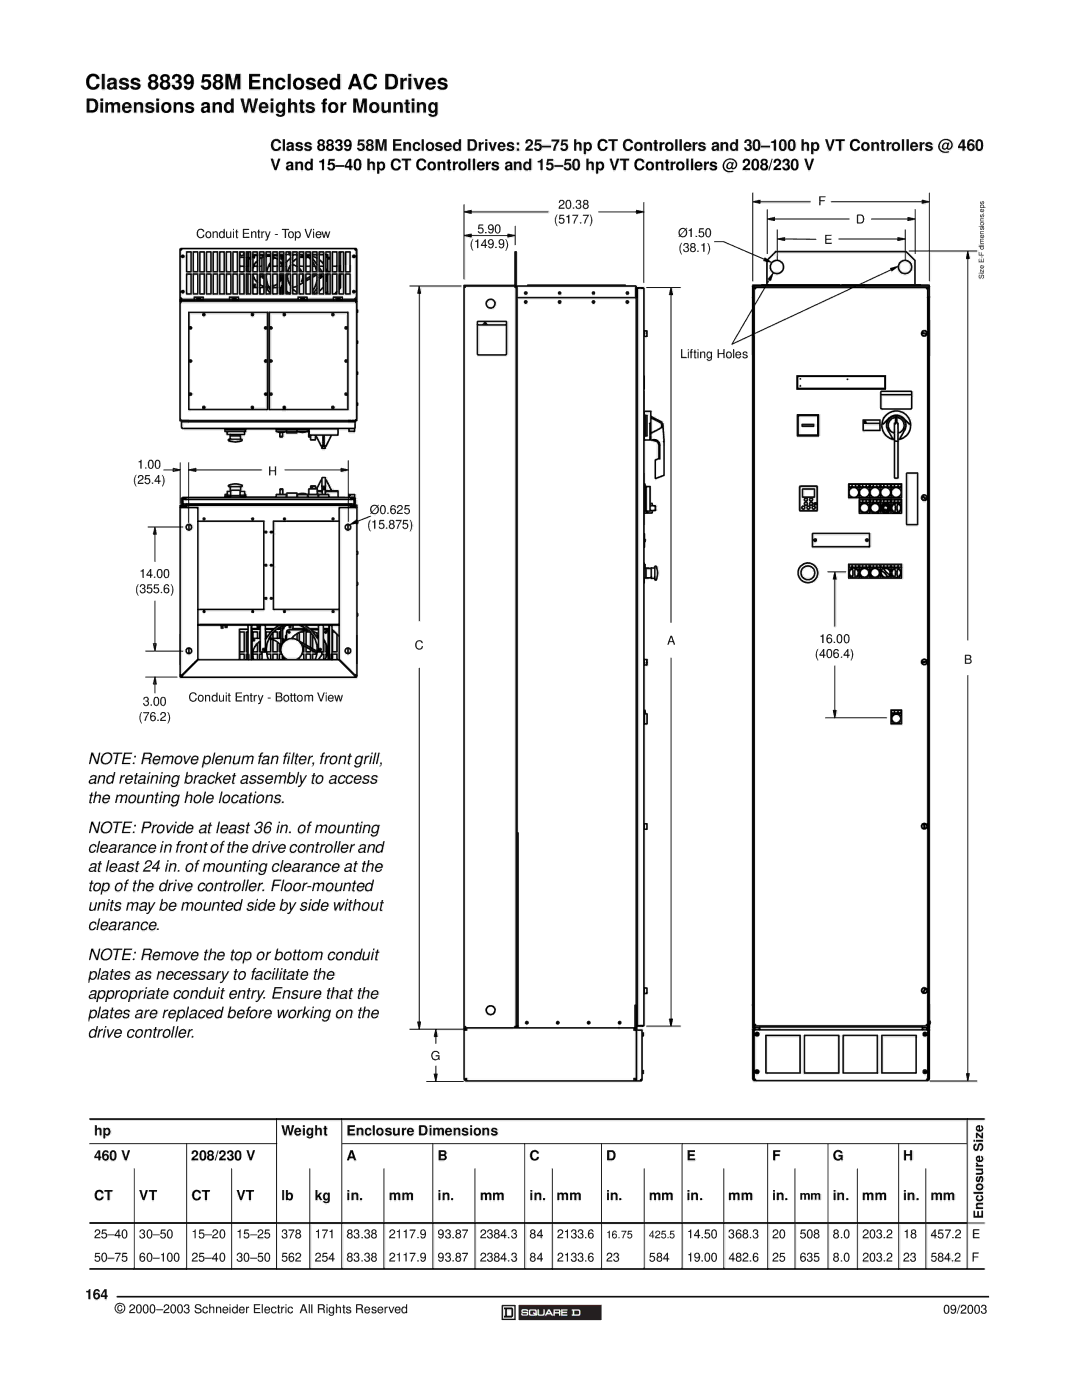 Schneider Electric 58 TRX manual Weight Enclosure Dimensions, 460 208/230, 164 